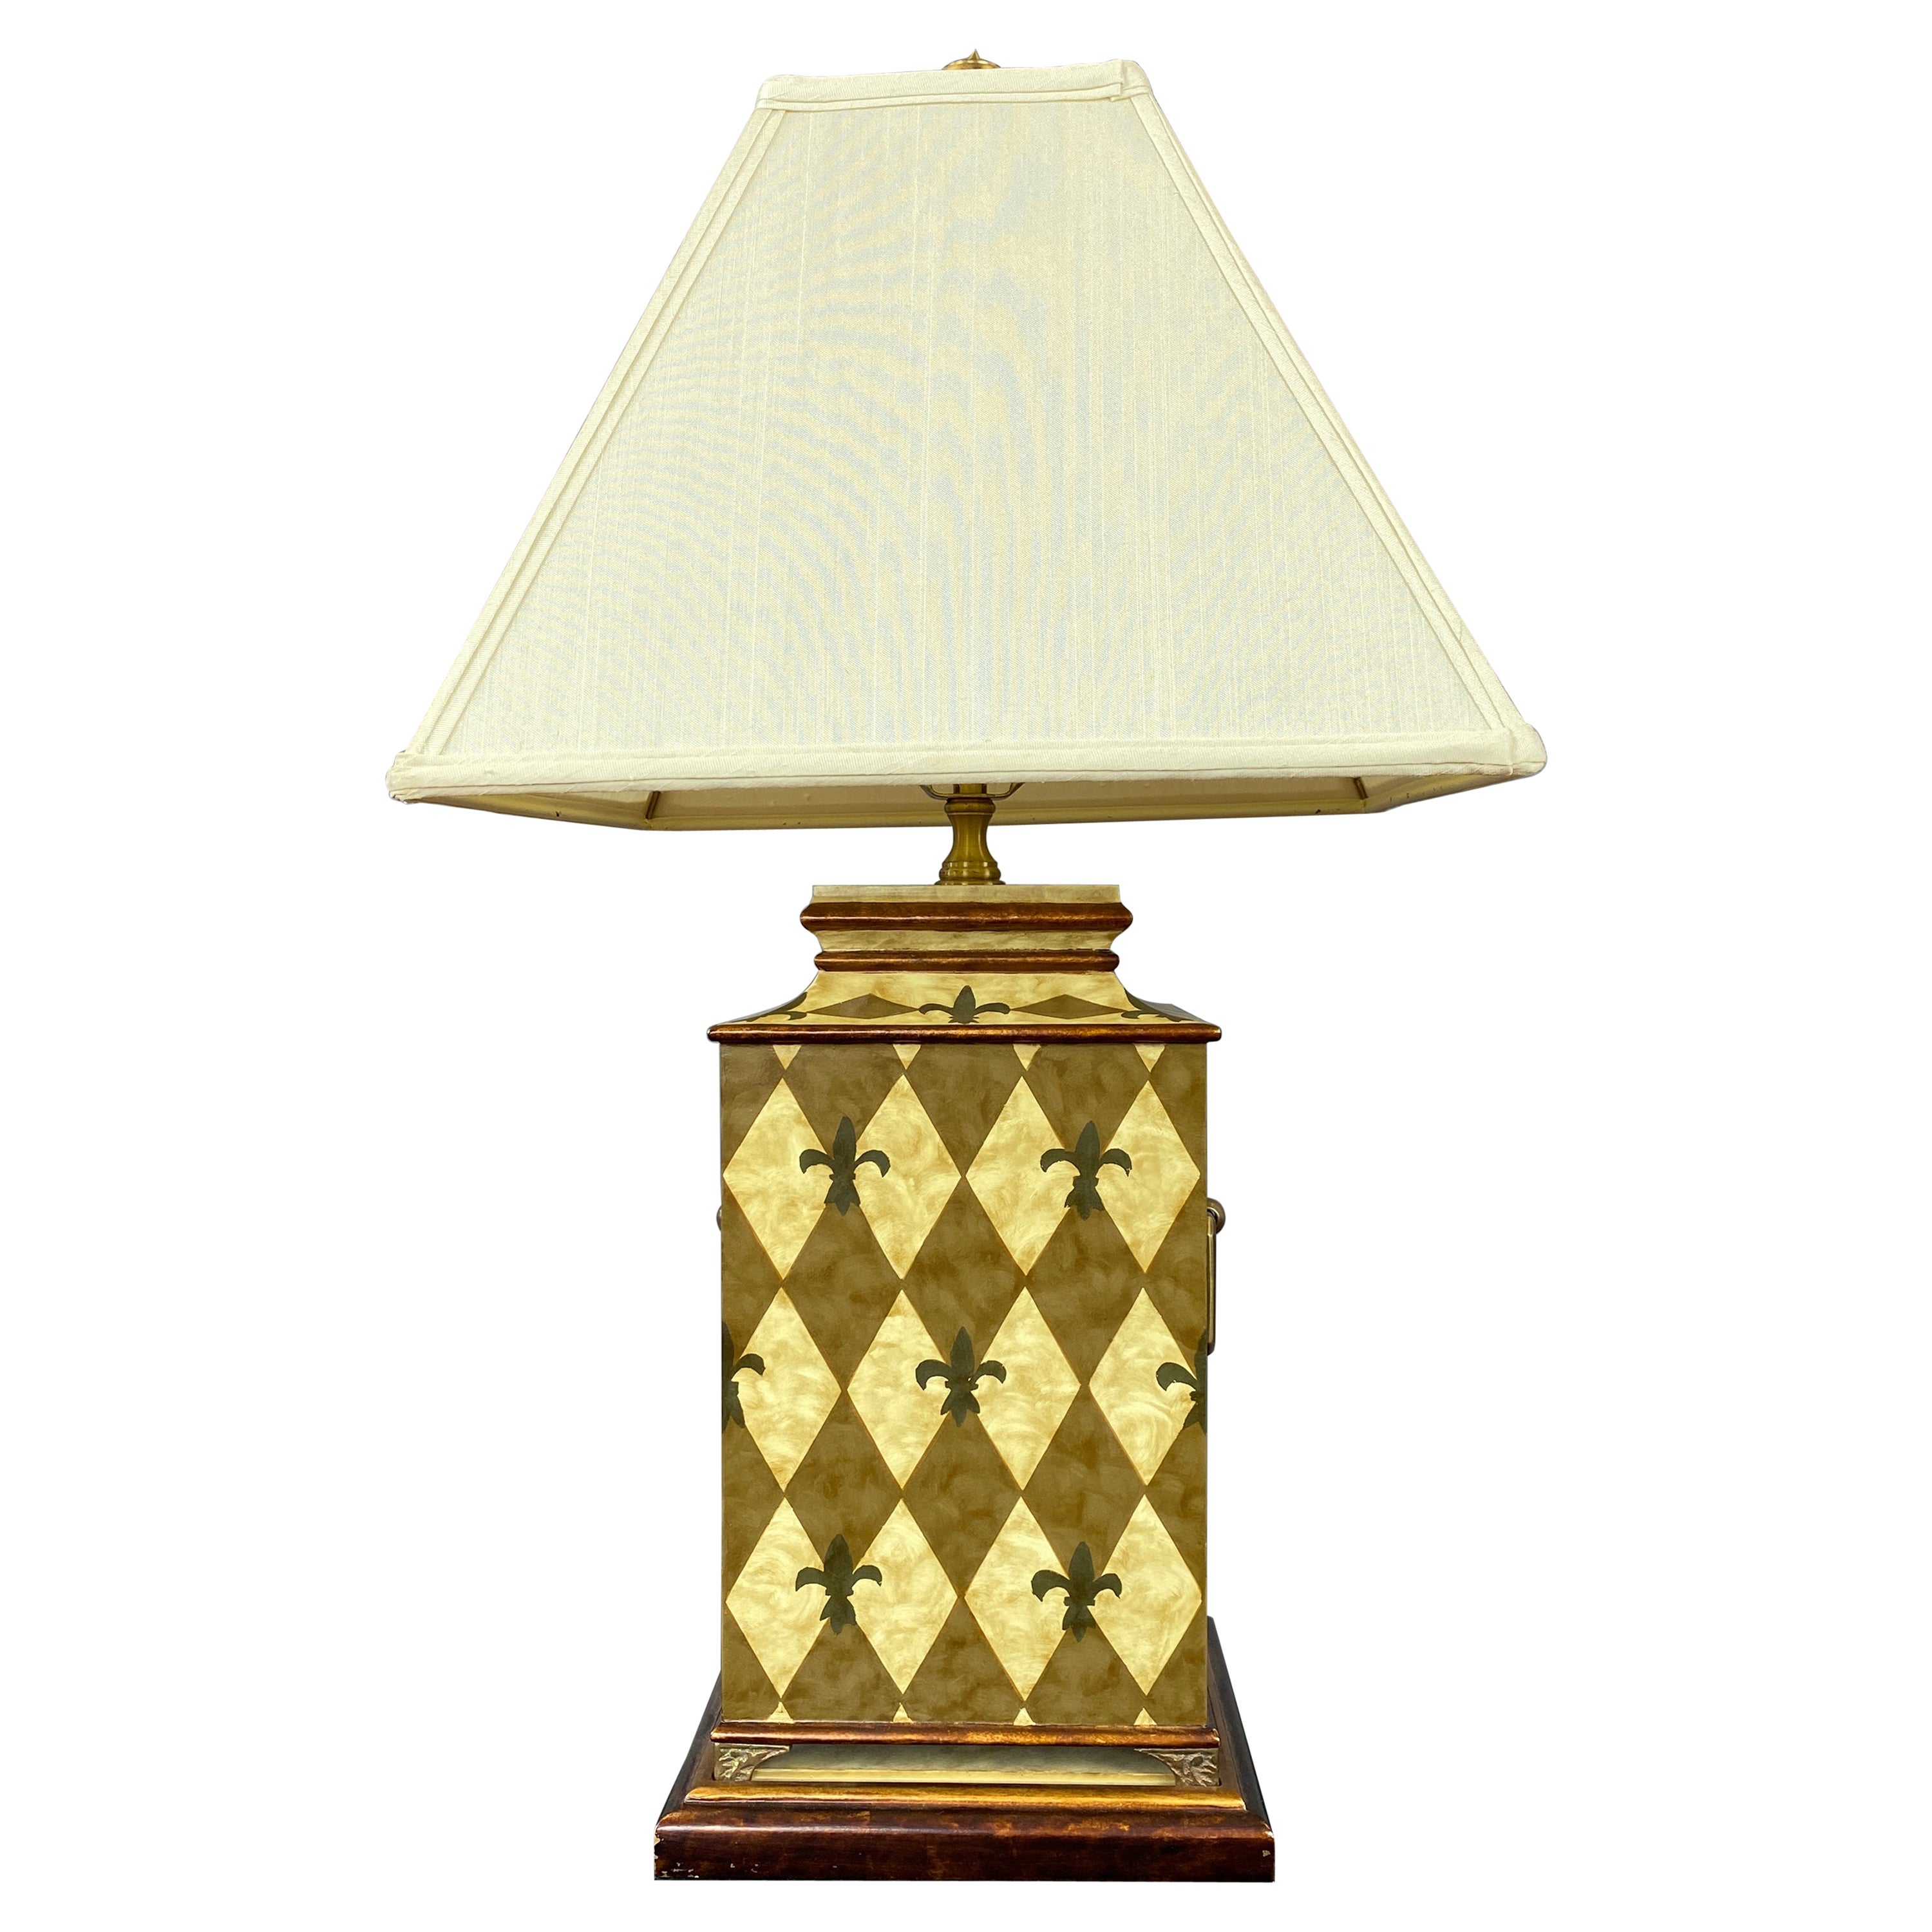 Wildwood Florentine lampe de table en vente